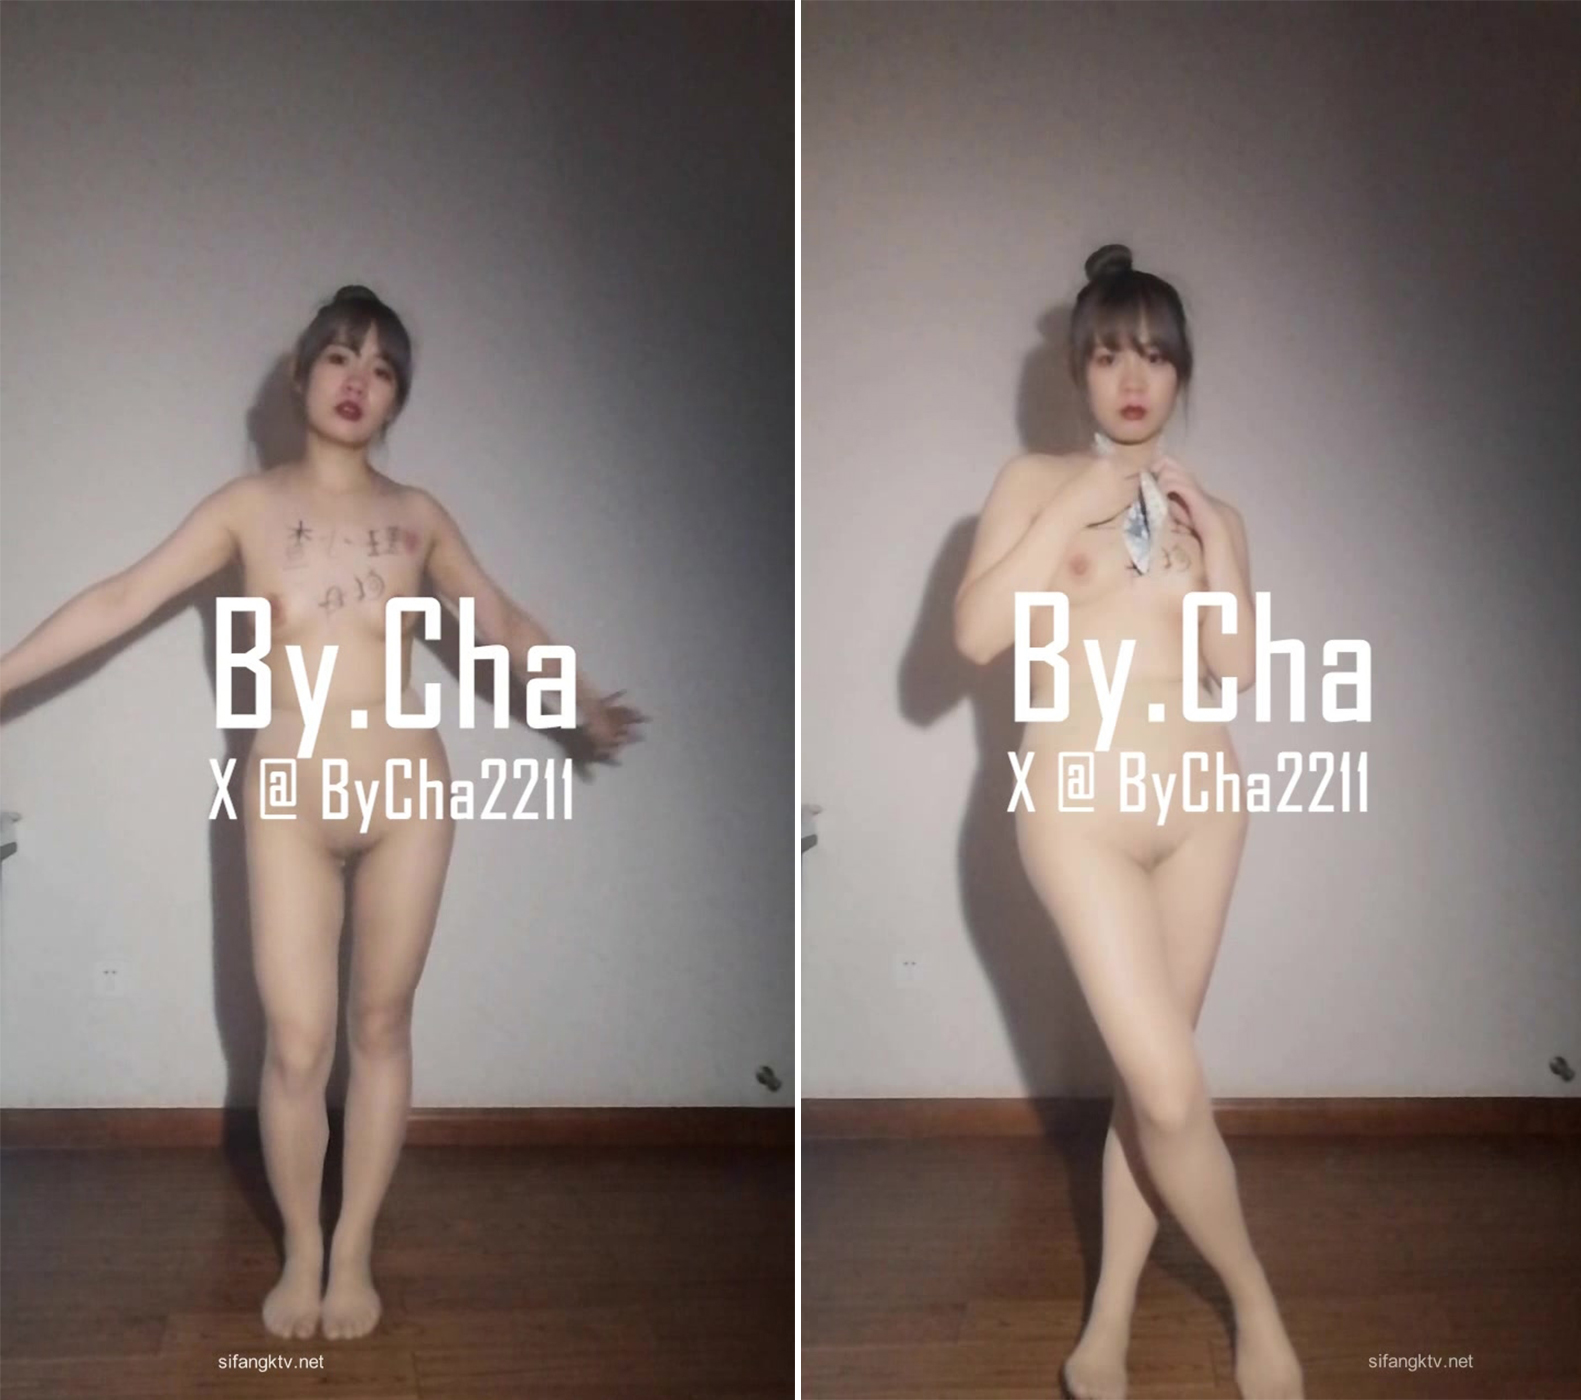 Twitter God [Charlie]'s latest work - Bitch Pan Yuet Dancing